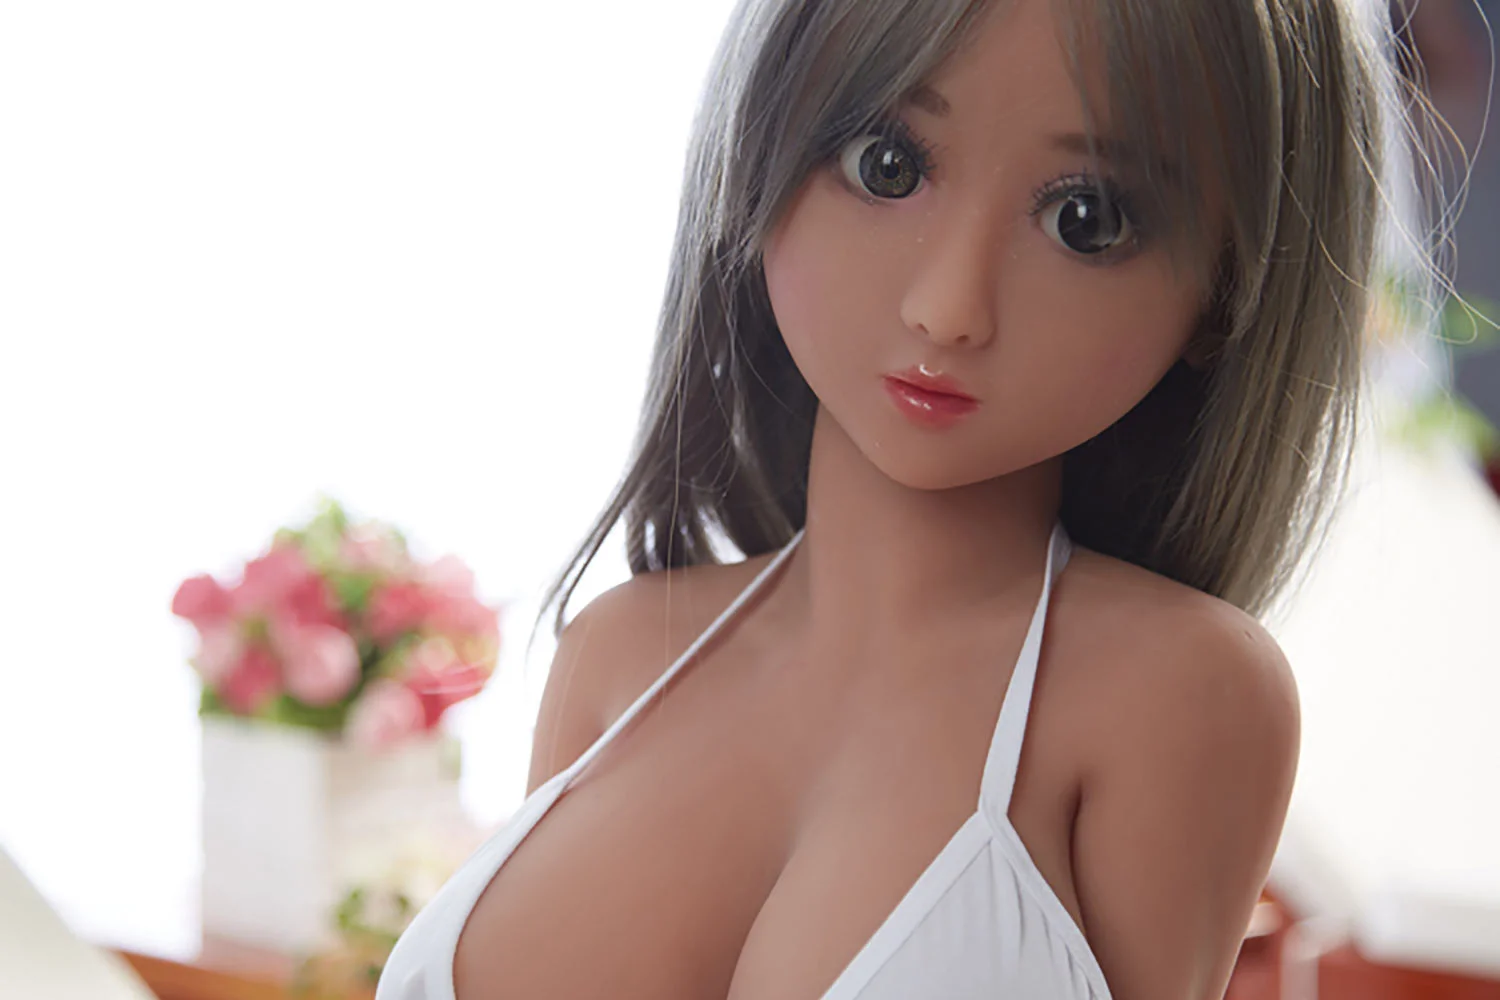 Mini sex doll with big eyes